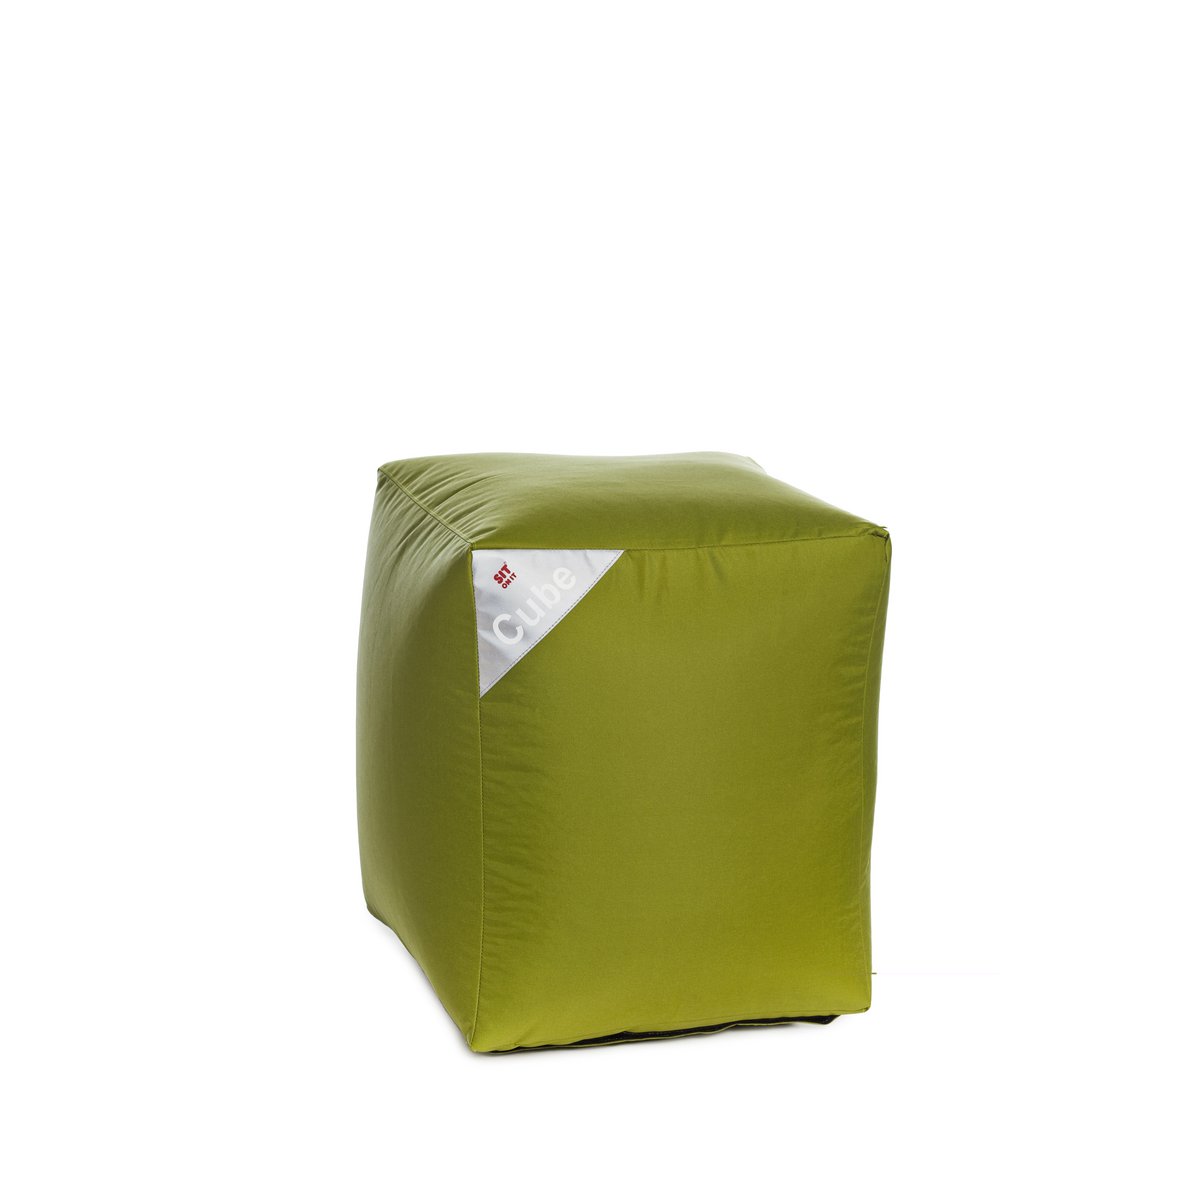 Sitzwürfel/Cube - olive